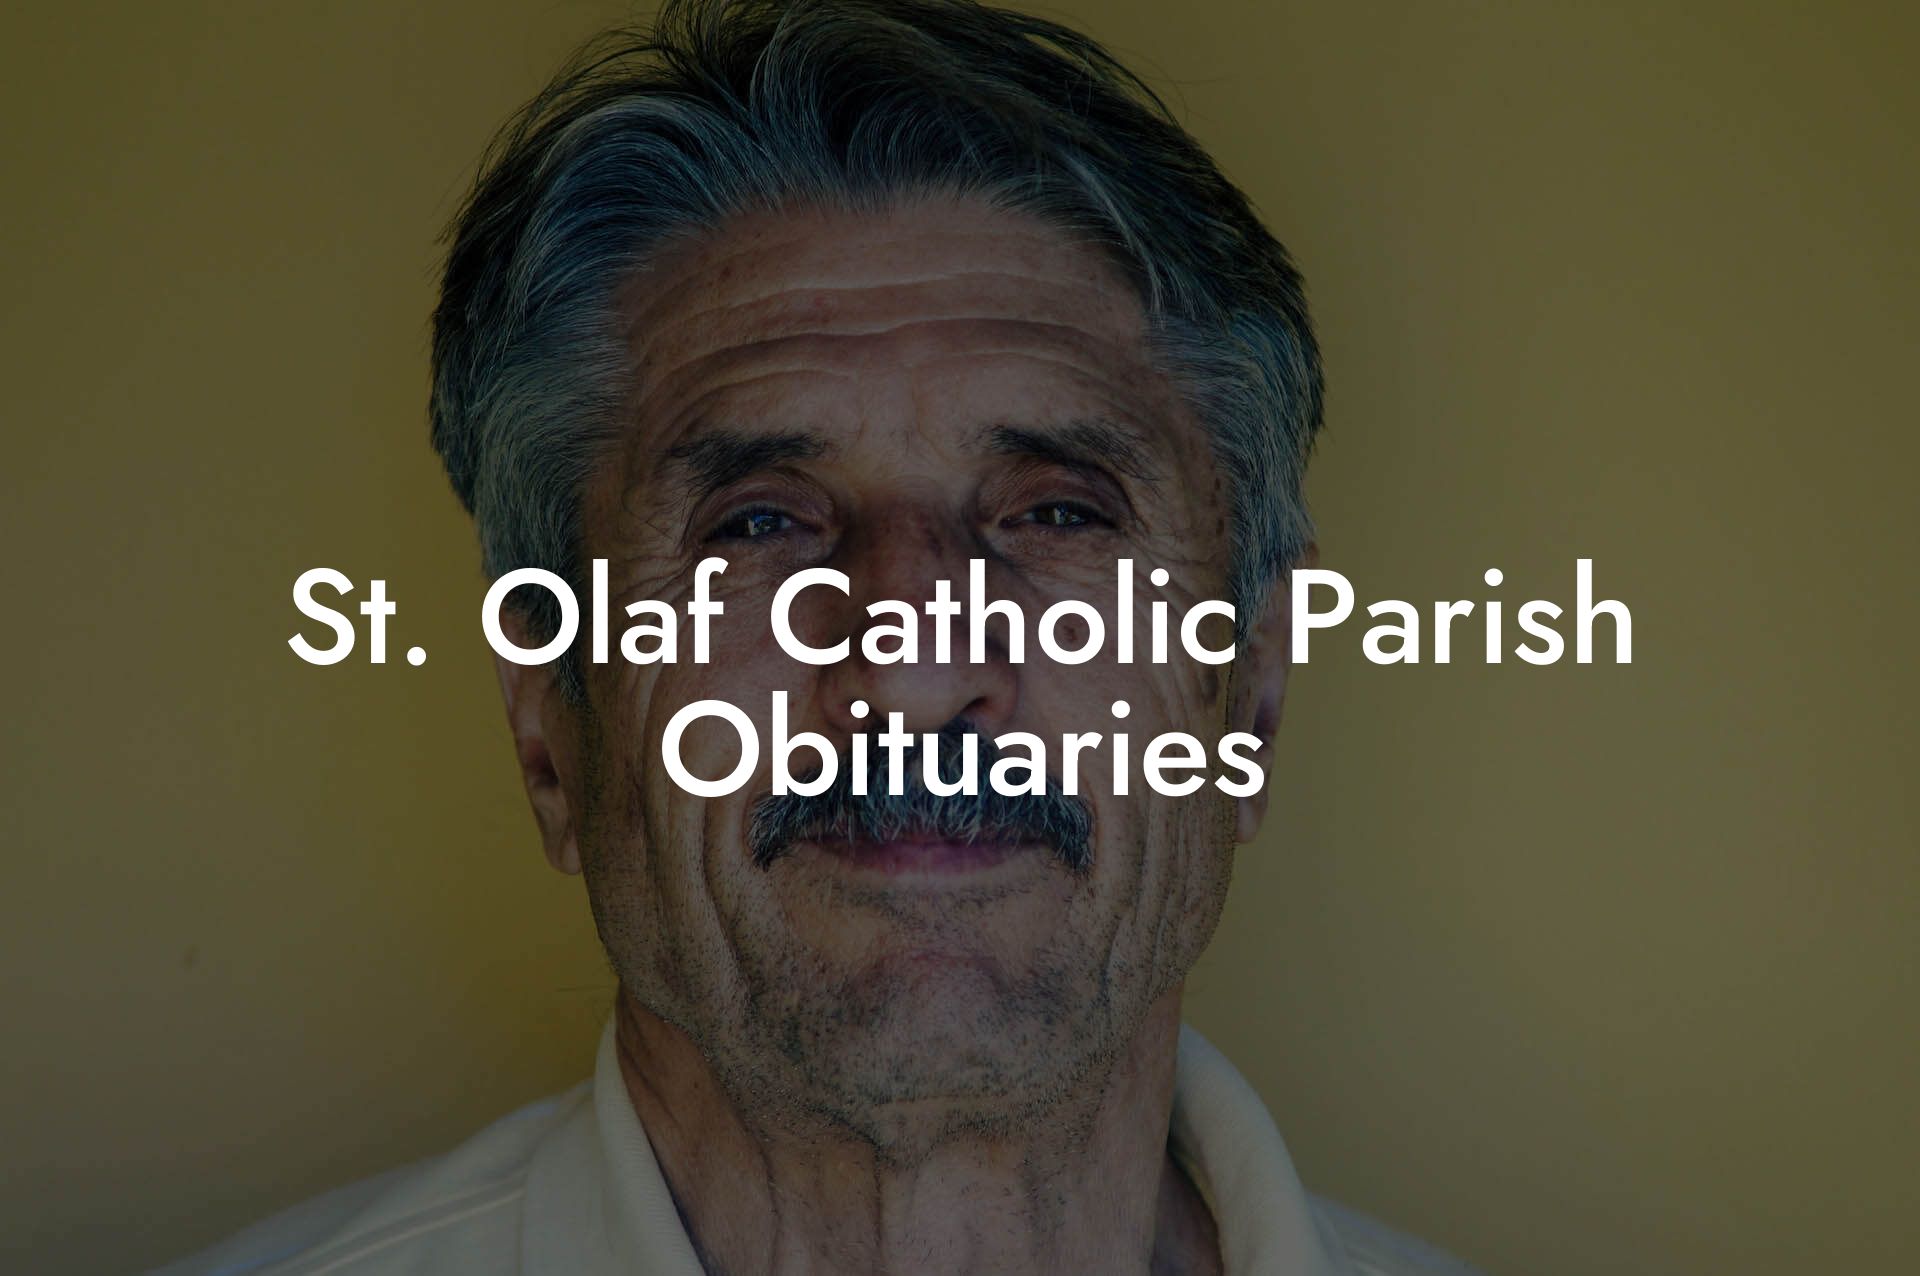 St. Olaf Catholic Parish Obituaries